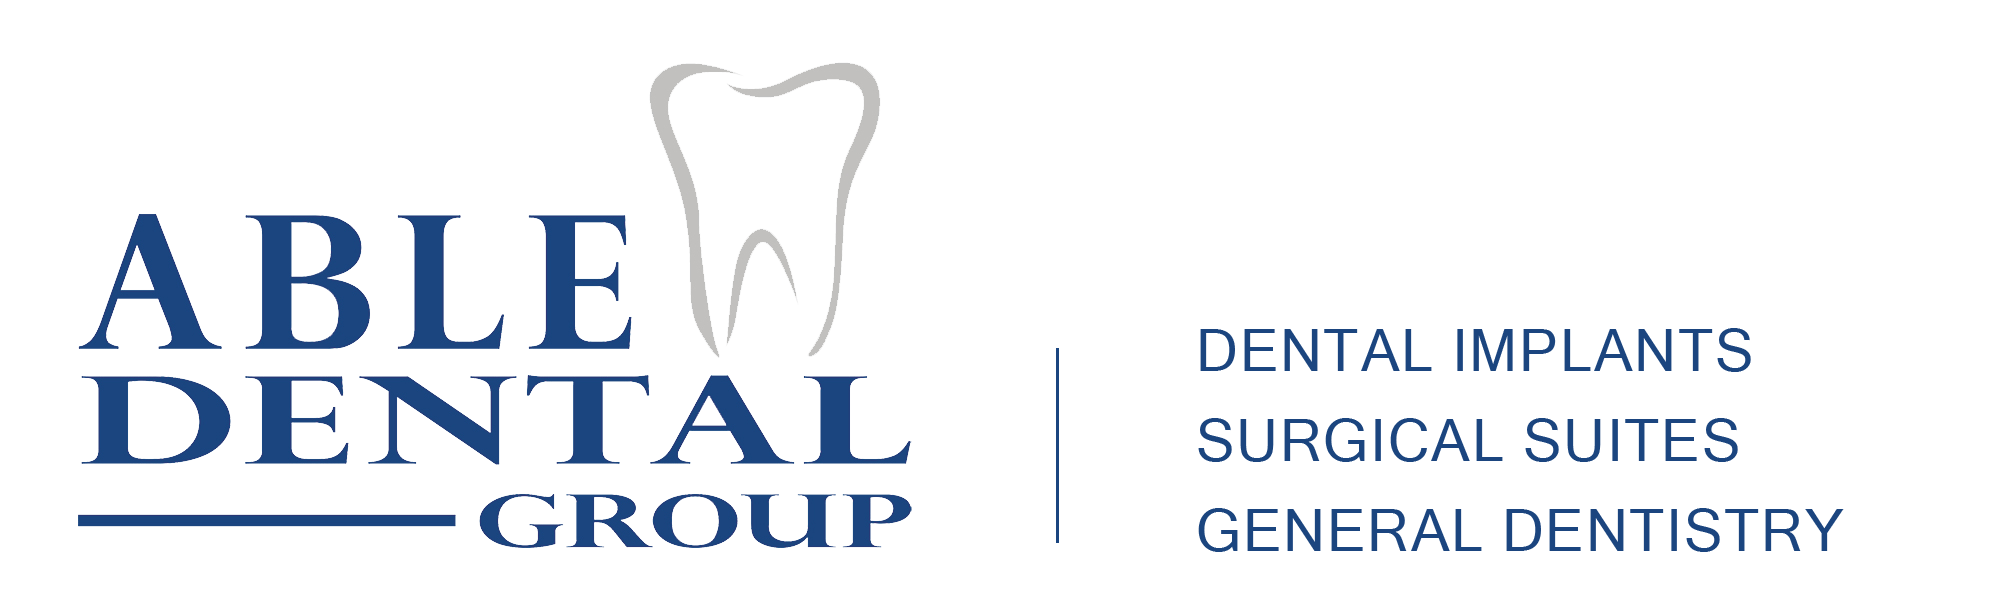 Able Dental Group - Logo